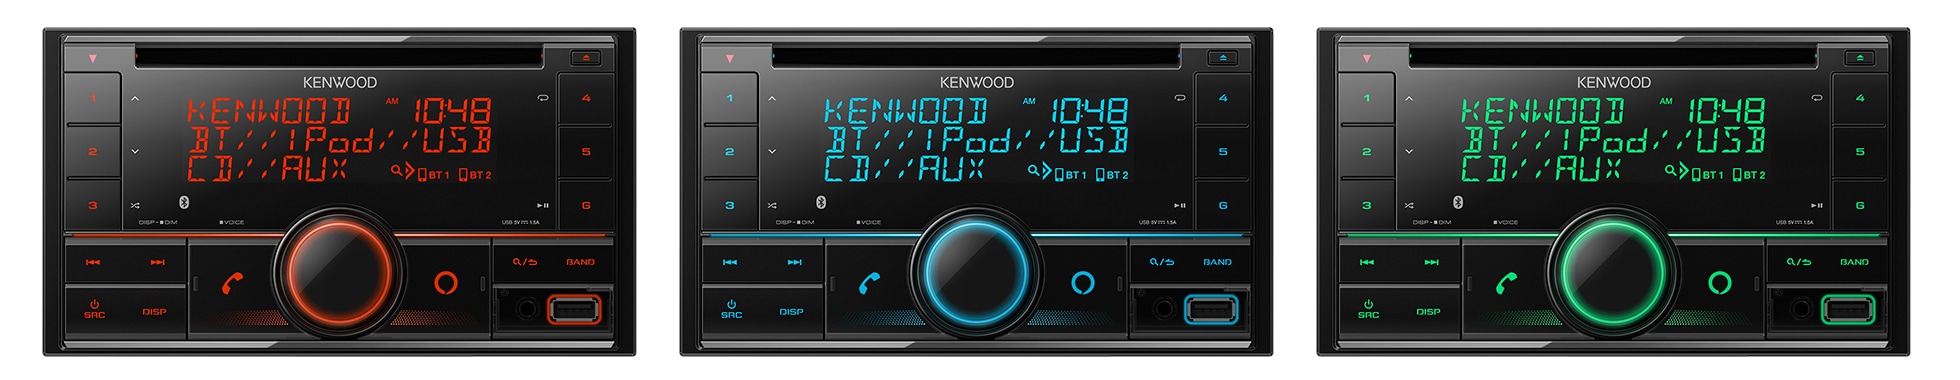 Kenwood Bluetooth CD Receiver Alexa Built-In Satellite Radio Ready Black  DPX505BT - Best Buy